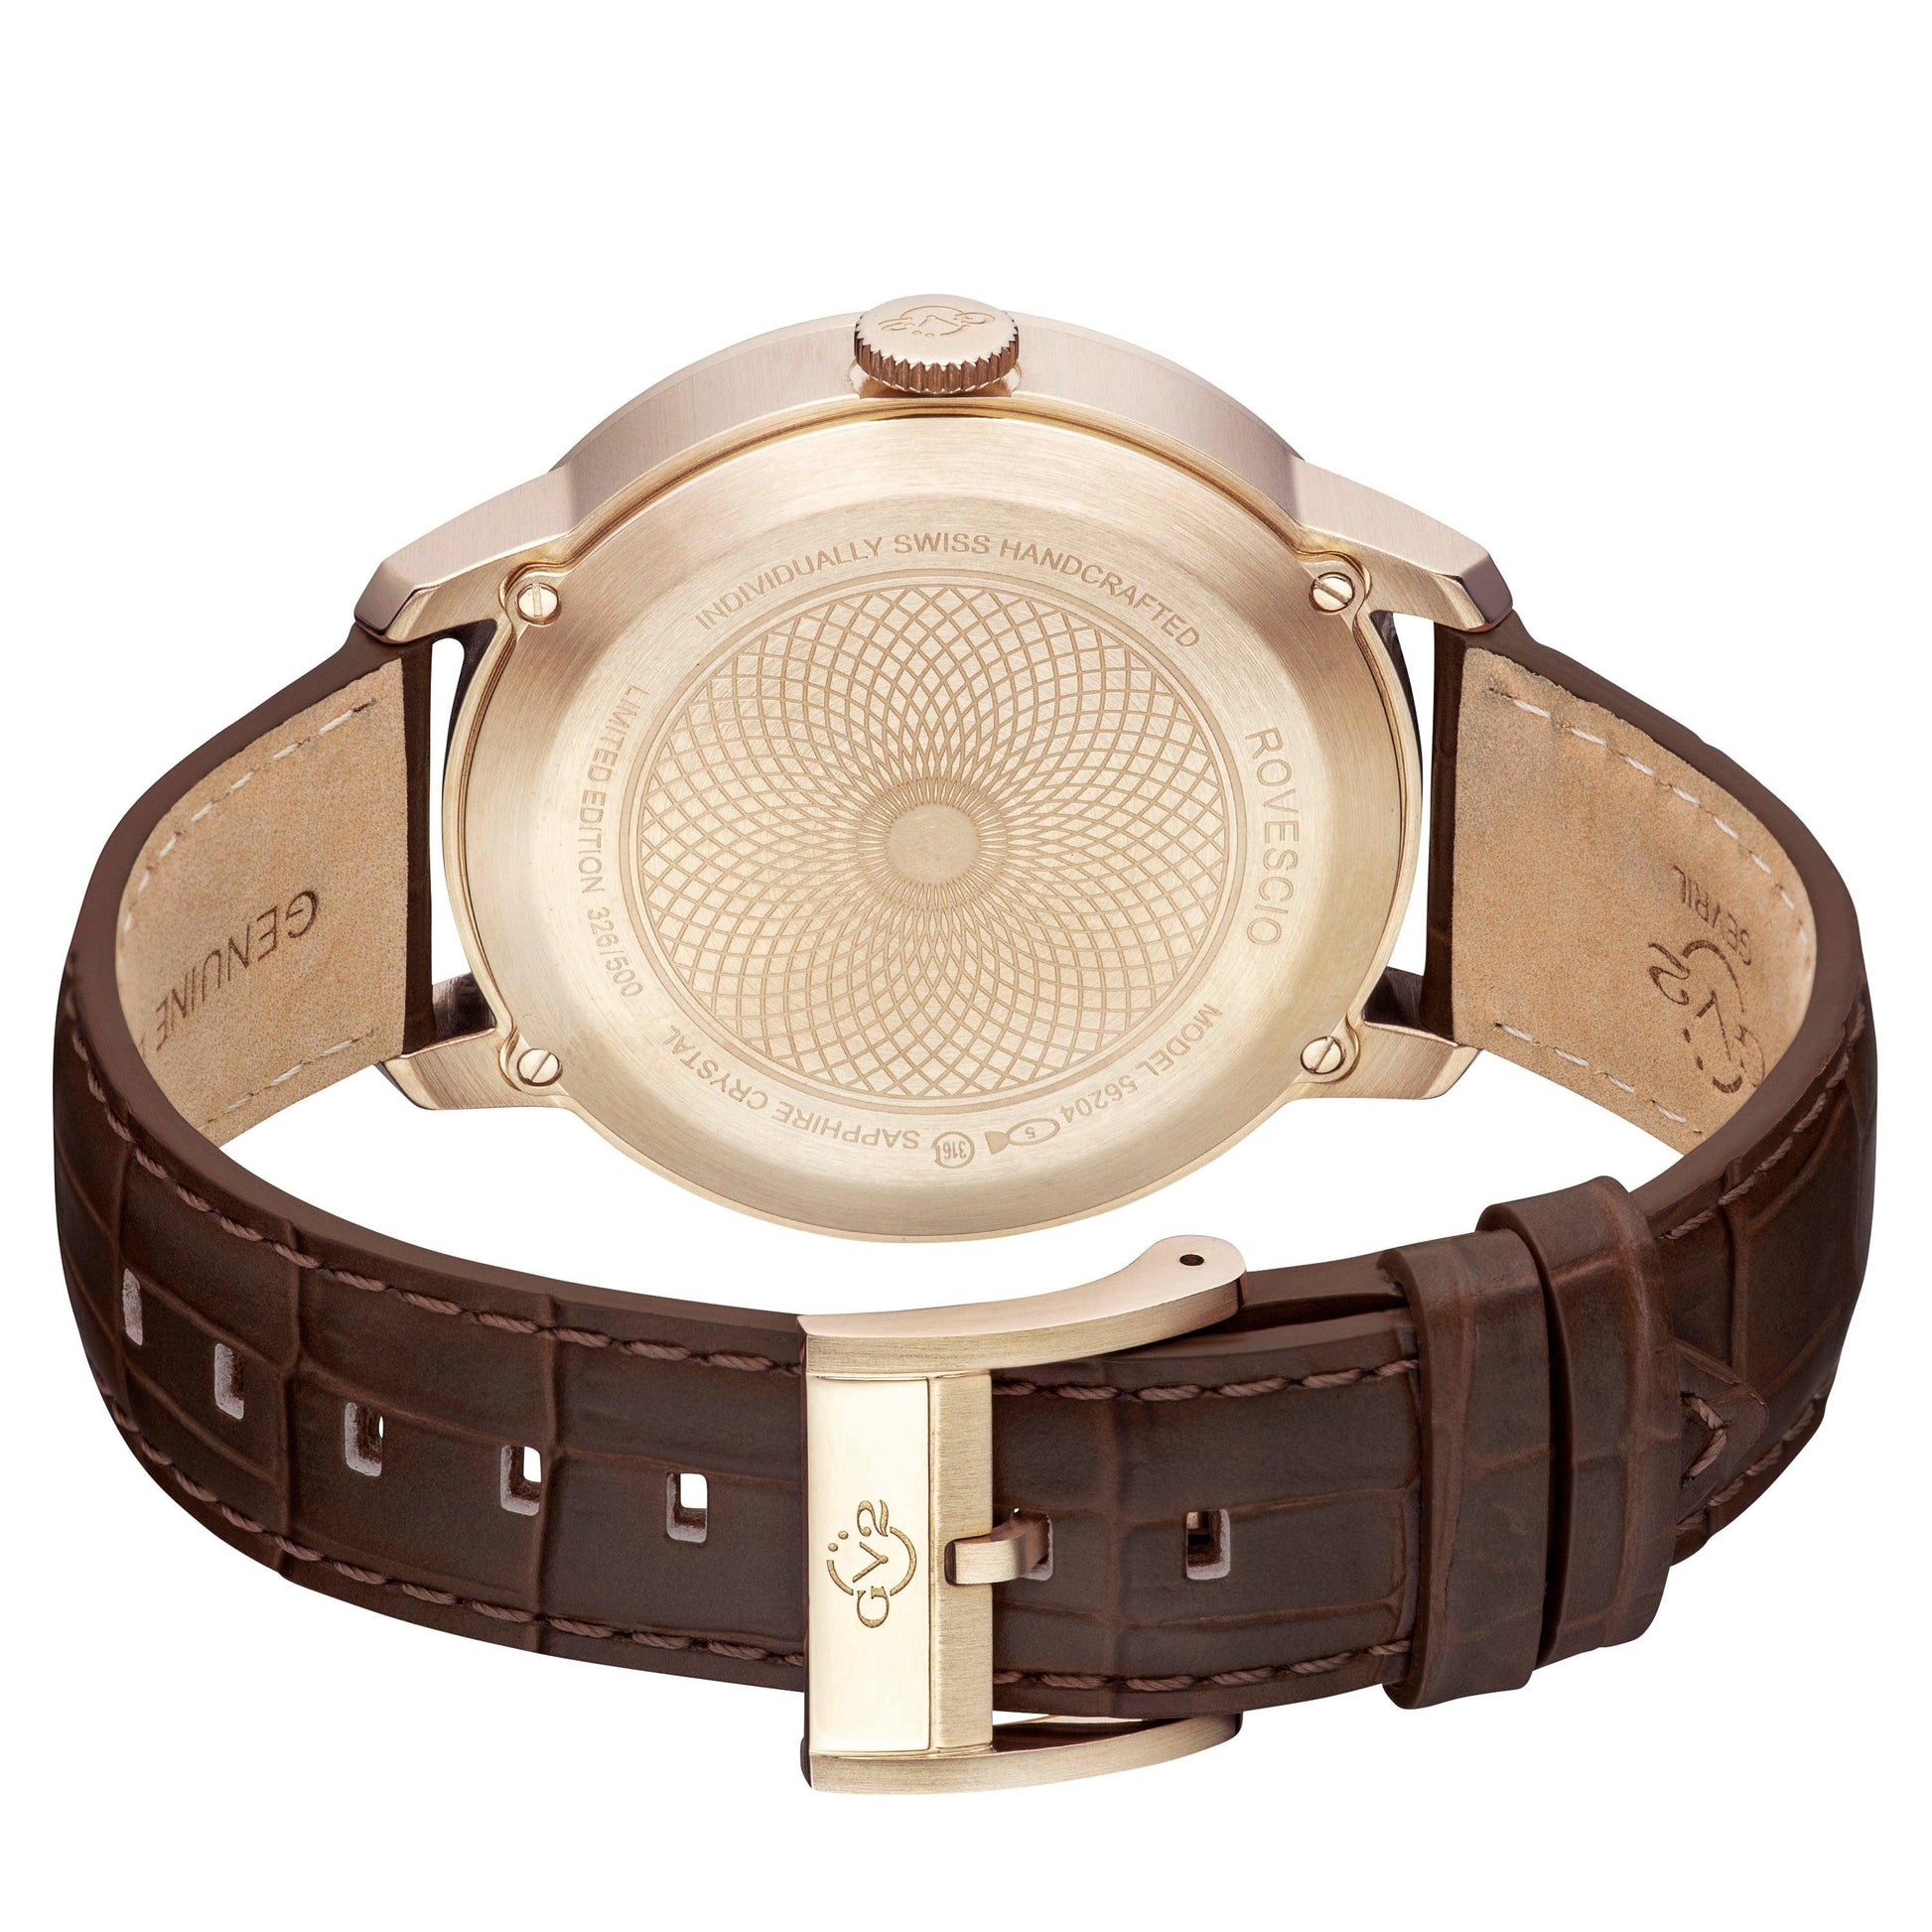 Gevril-Luxury-Swiss-Watches-GV2 Rovescio - Day/Date-56203